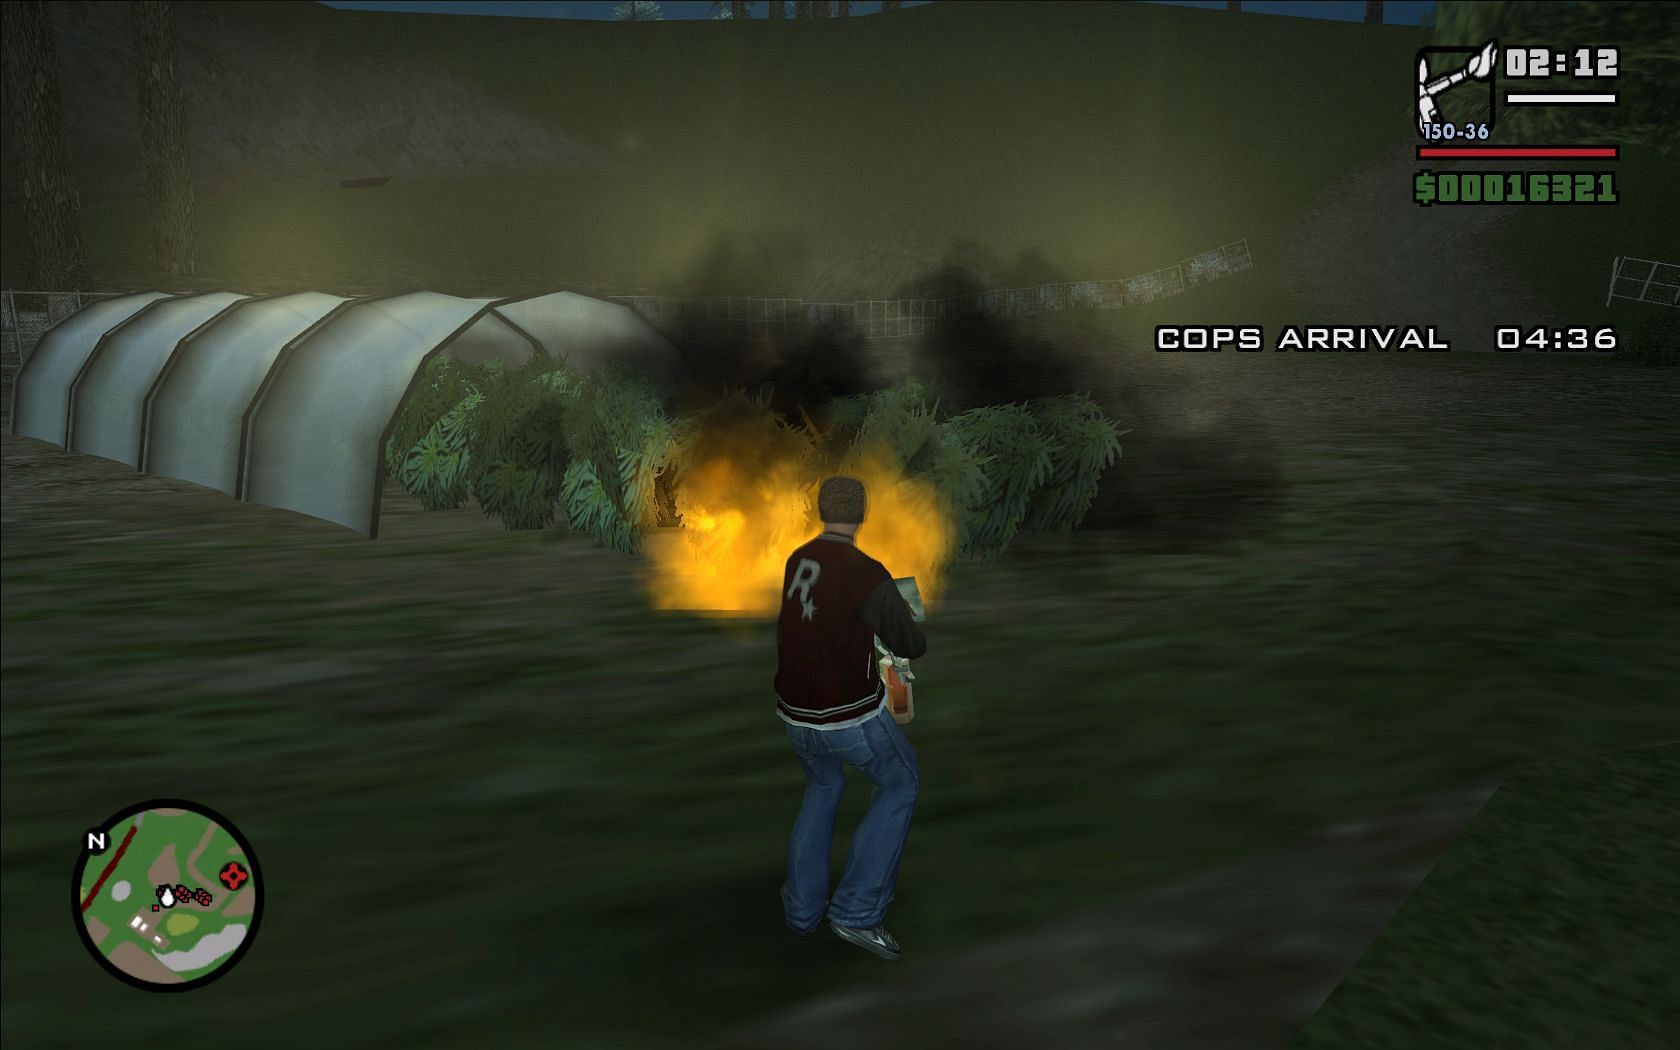 CJ using a flamethrower (Image via Rockstar Games)